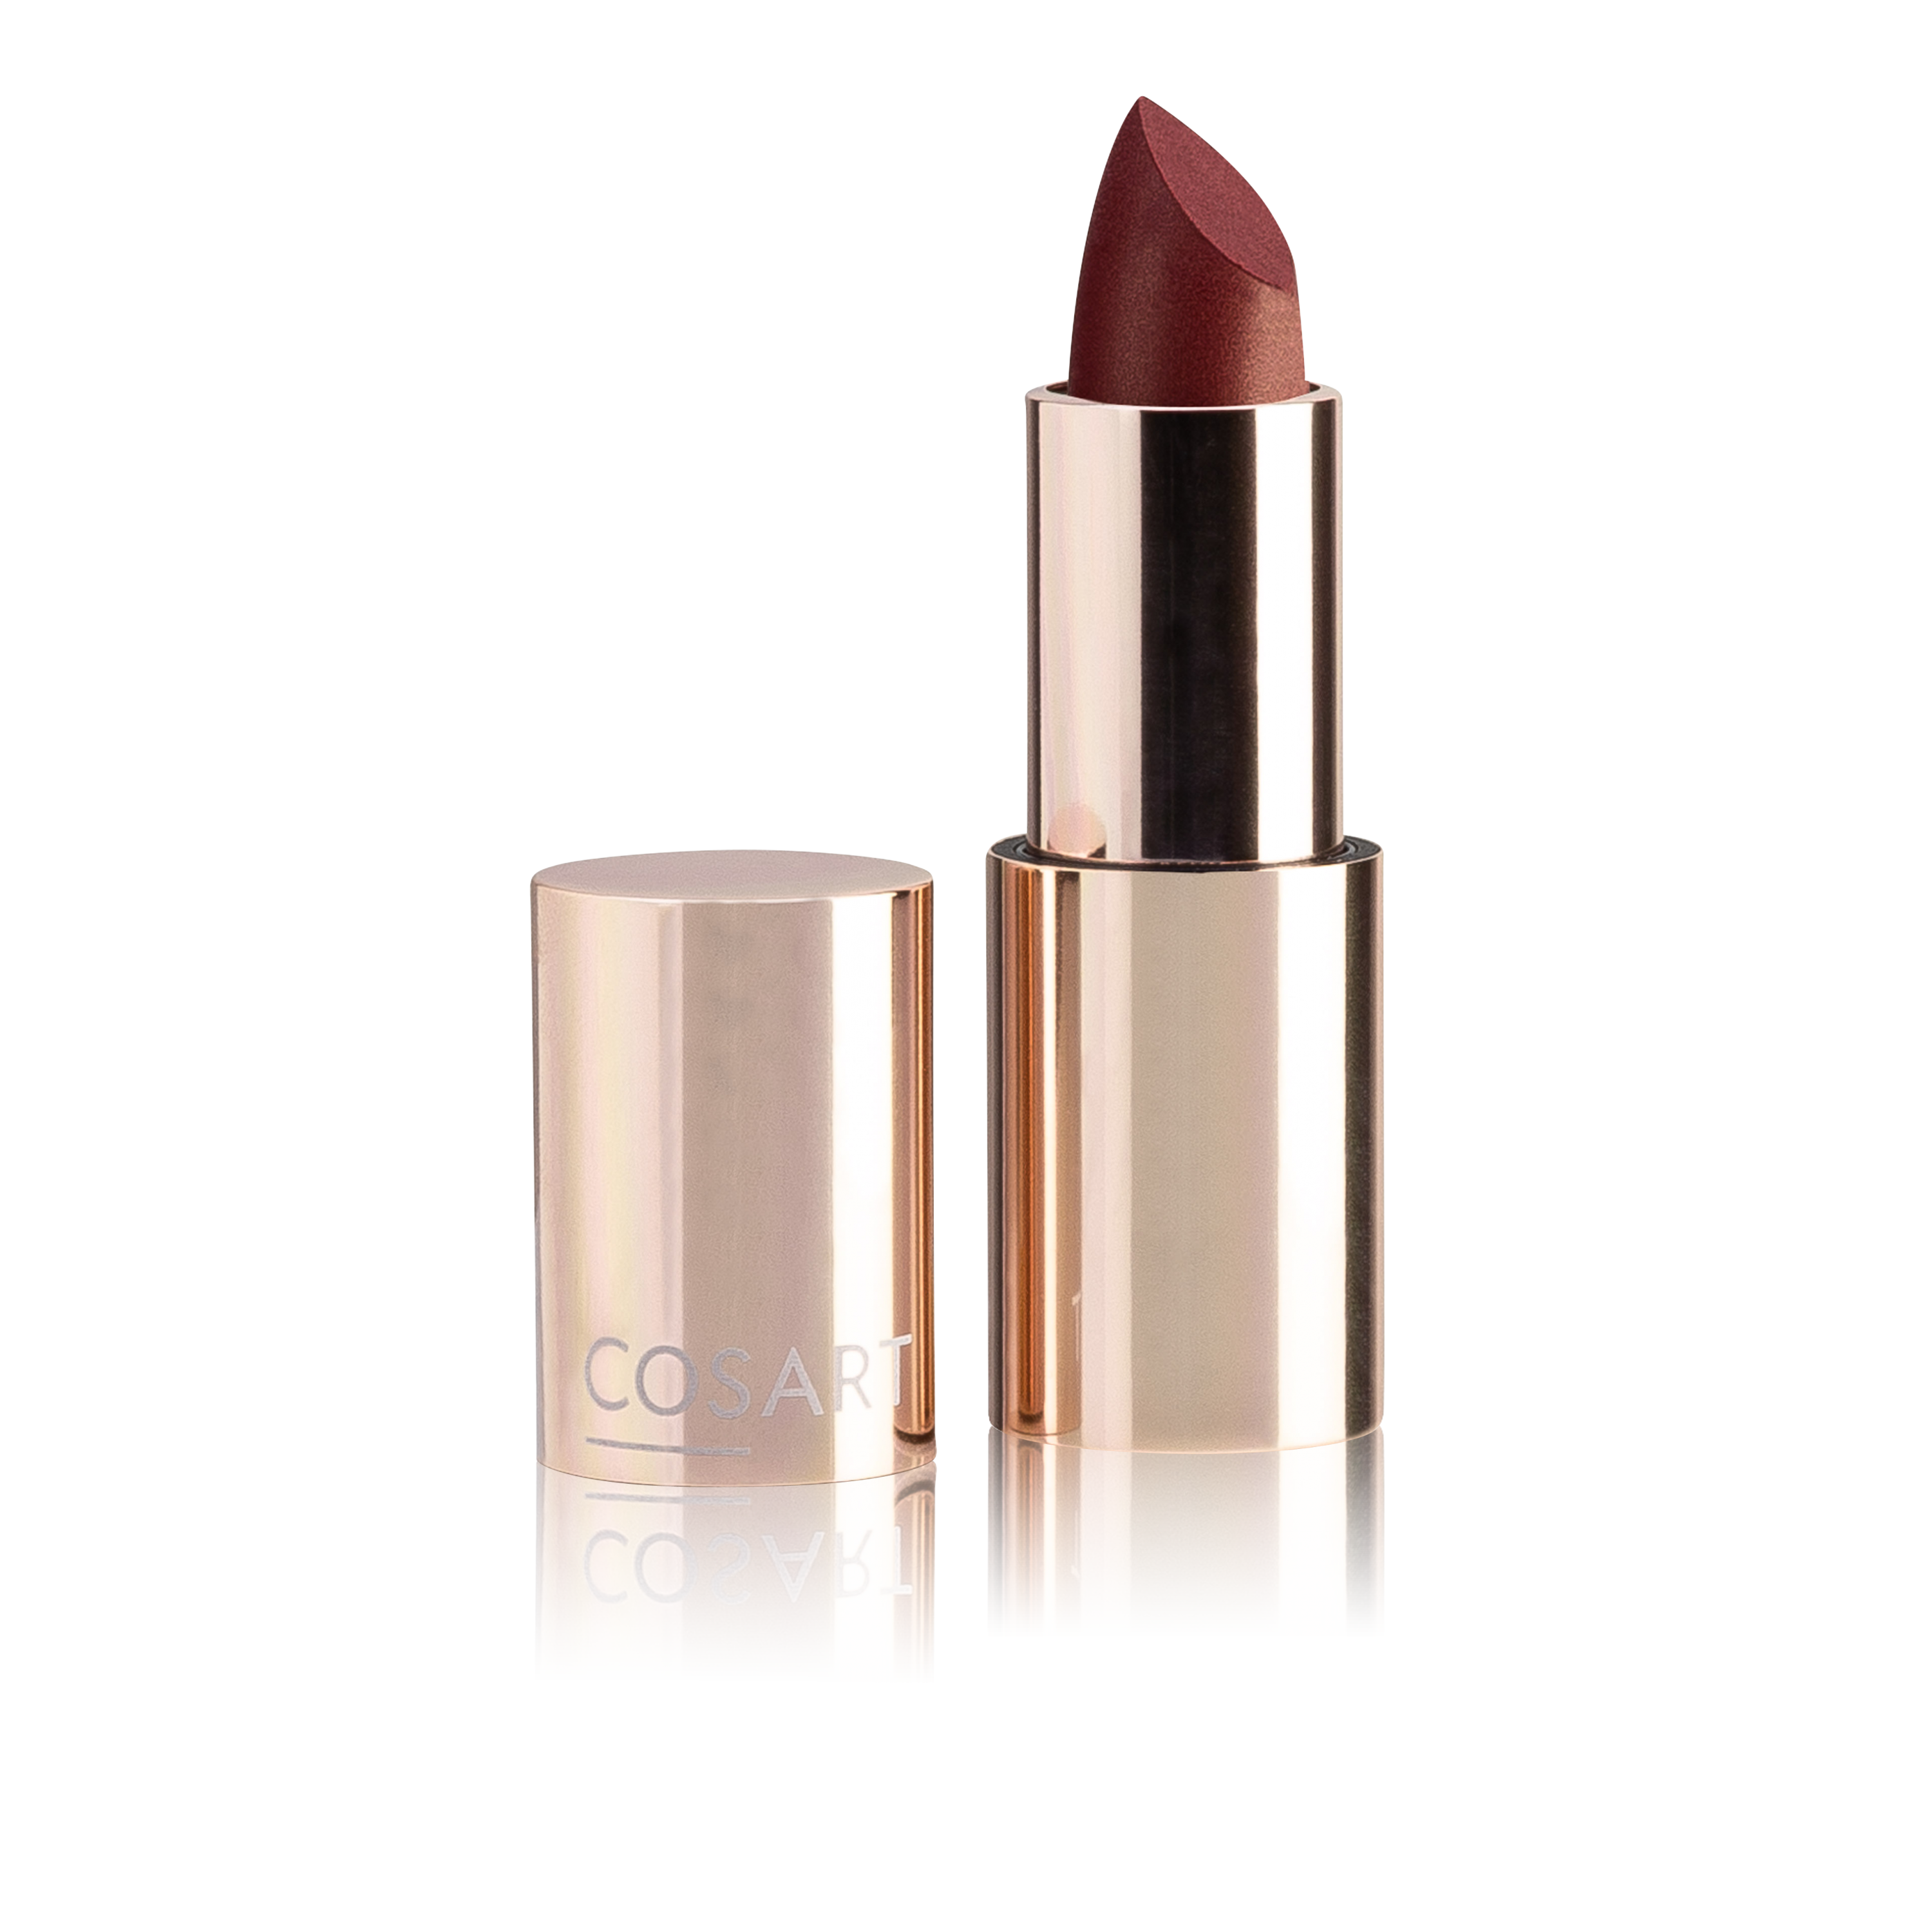 COSART Lipstick Elegance viola 3024 3,5 g